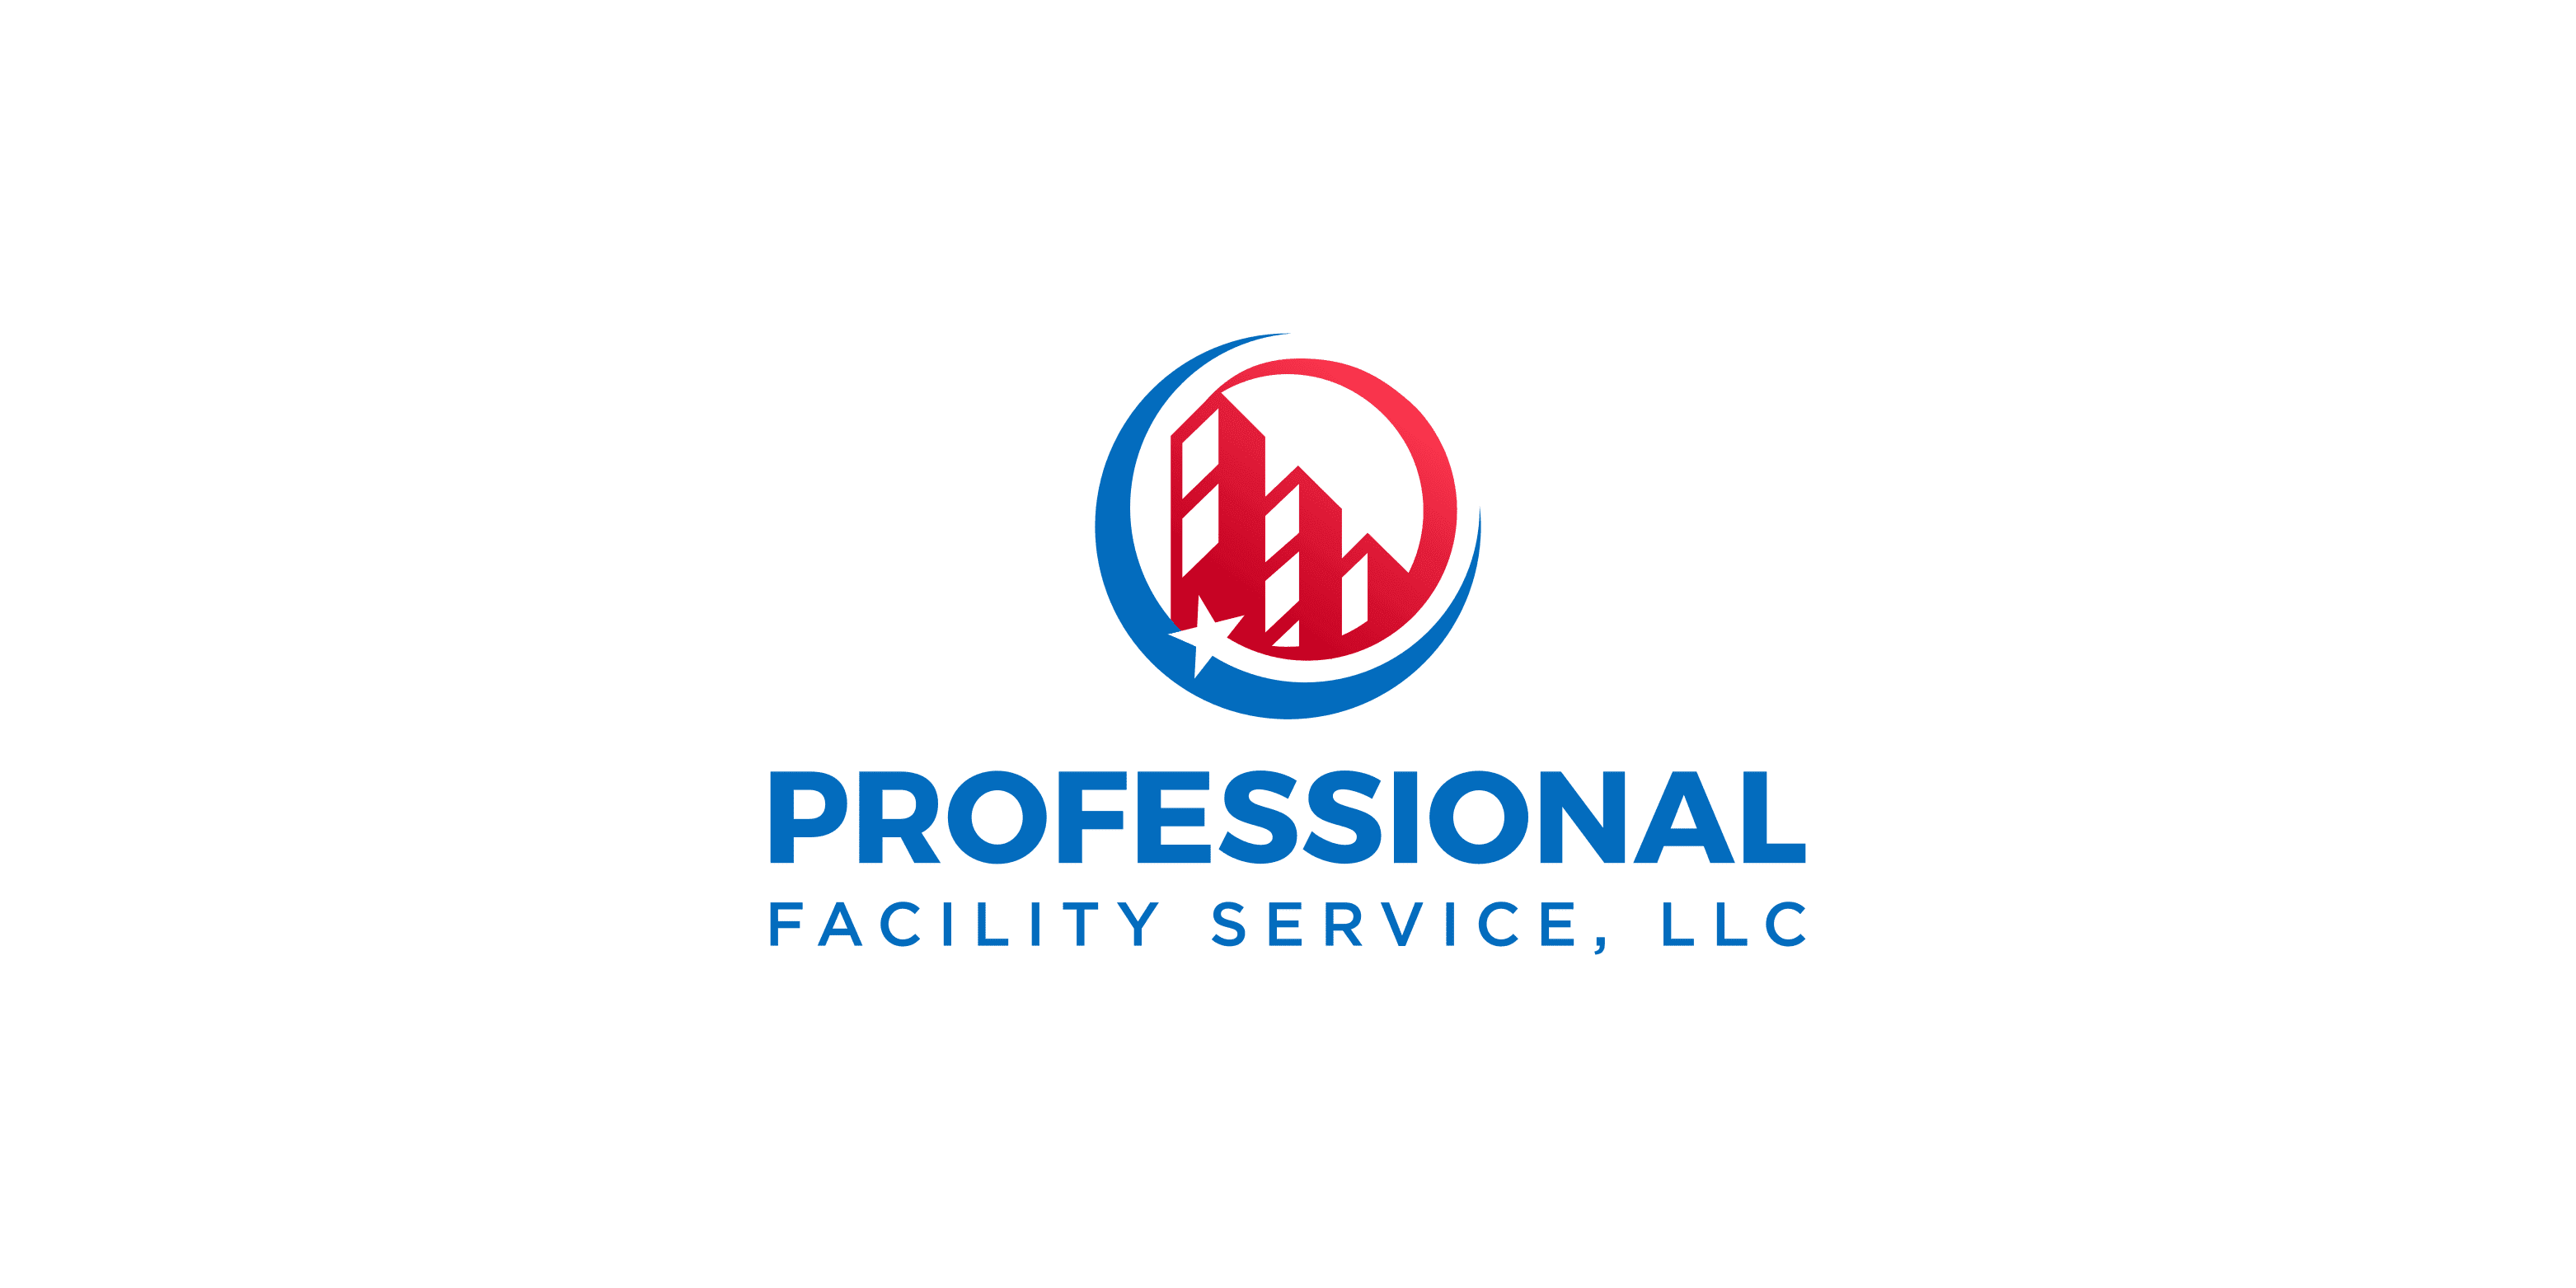 Professional Facility Service